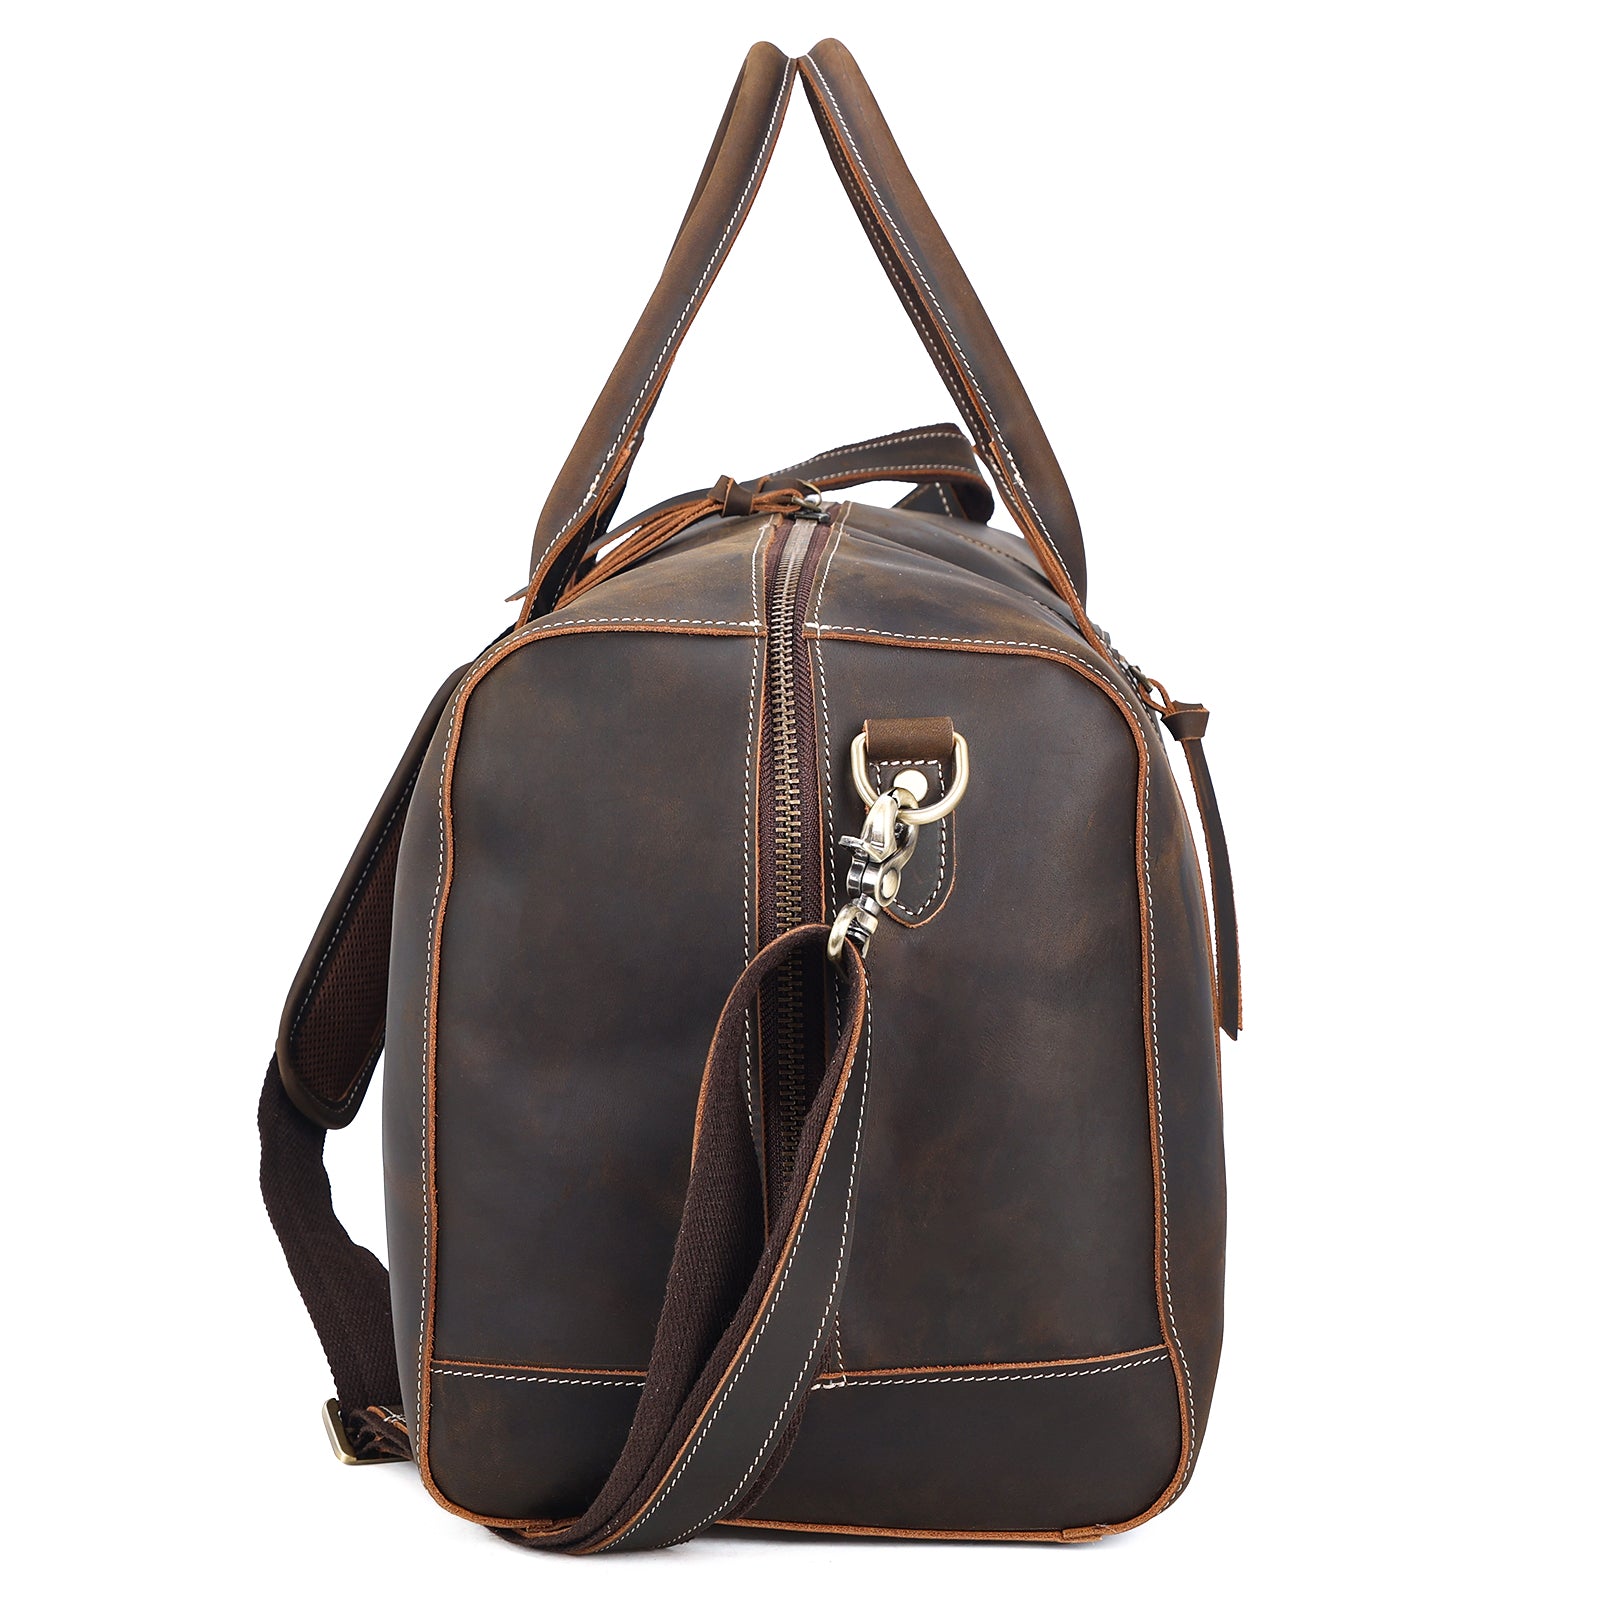 Polare 20" Leather Duffel Bag Overnight Weekender Bag (Profile)